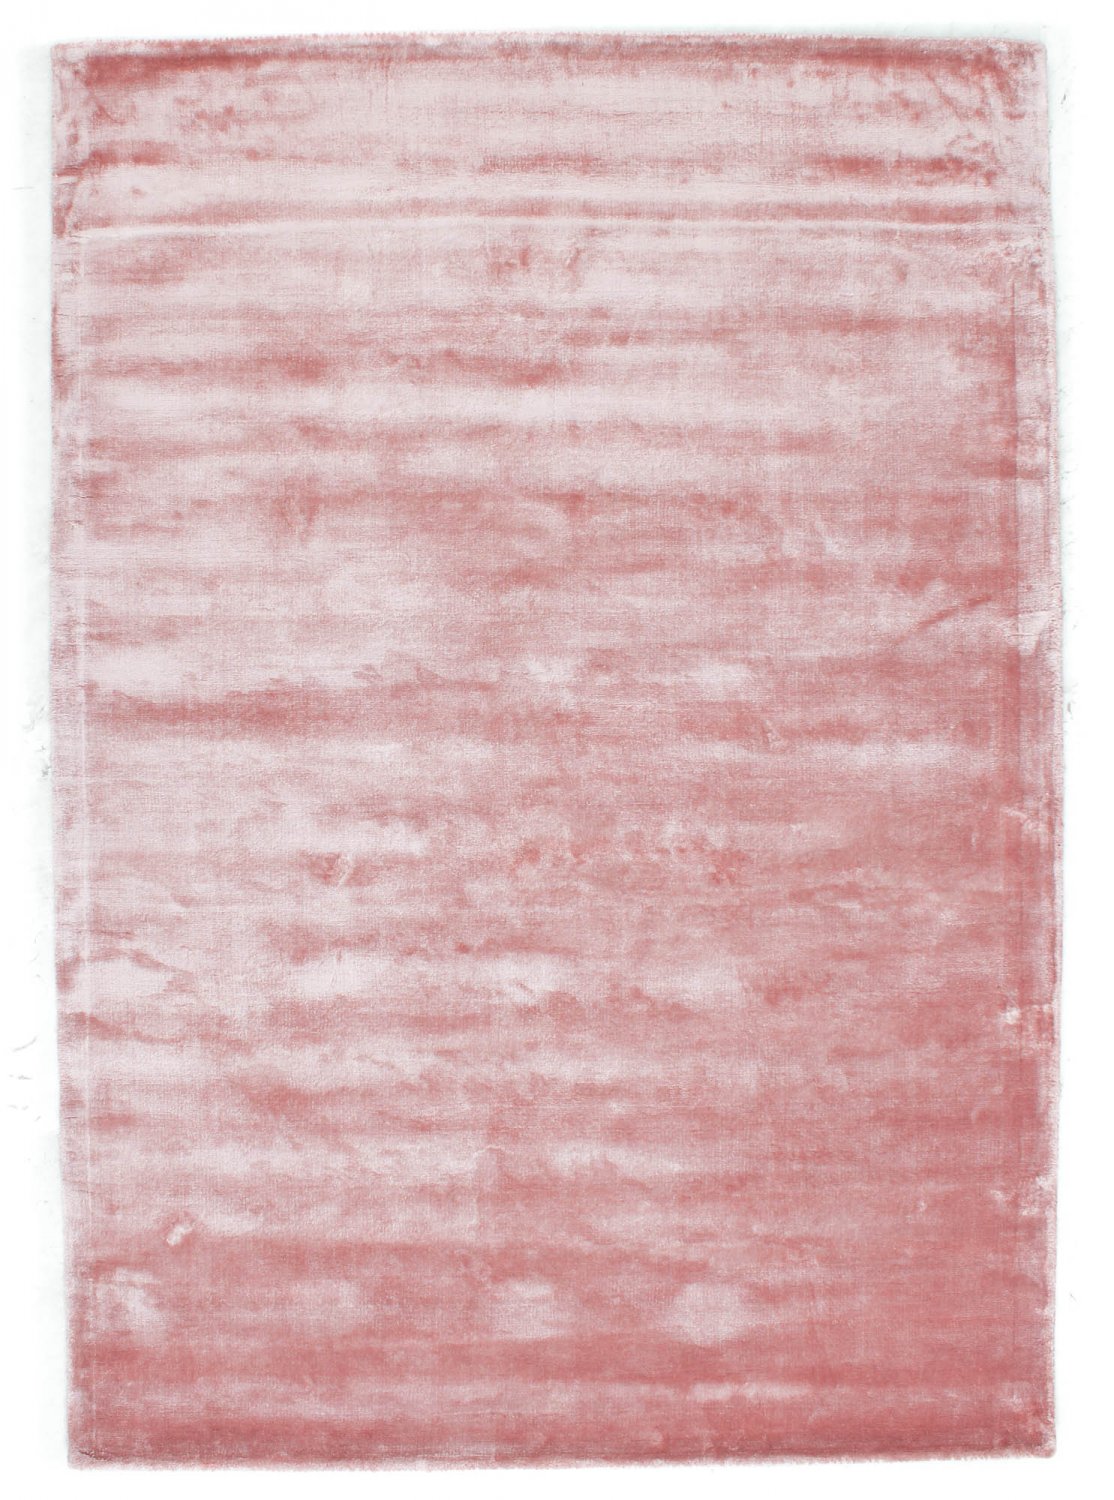 Viscose rug - Jodhpur Special Luxury Edition (pink)